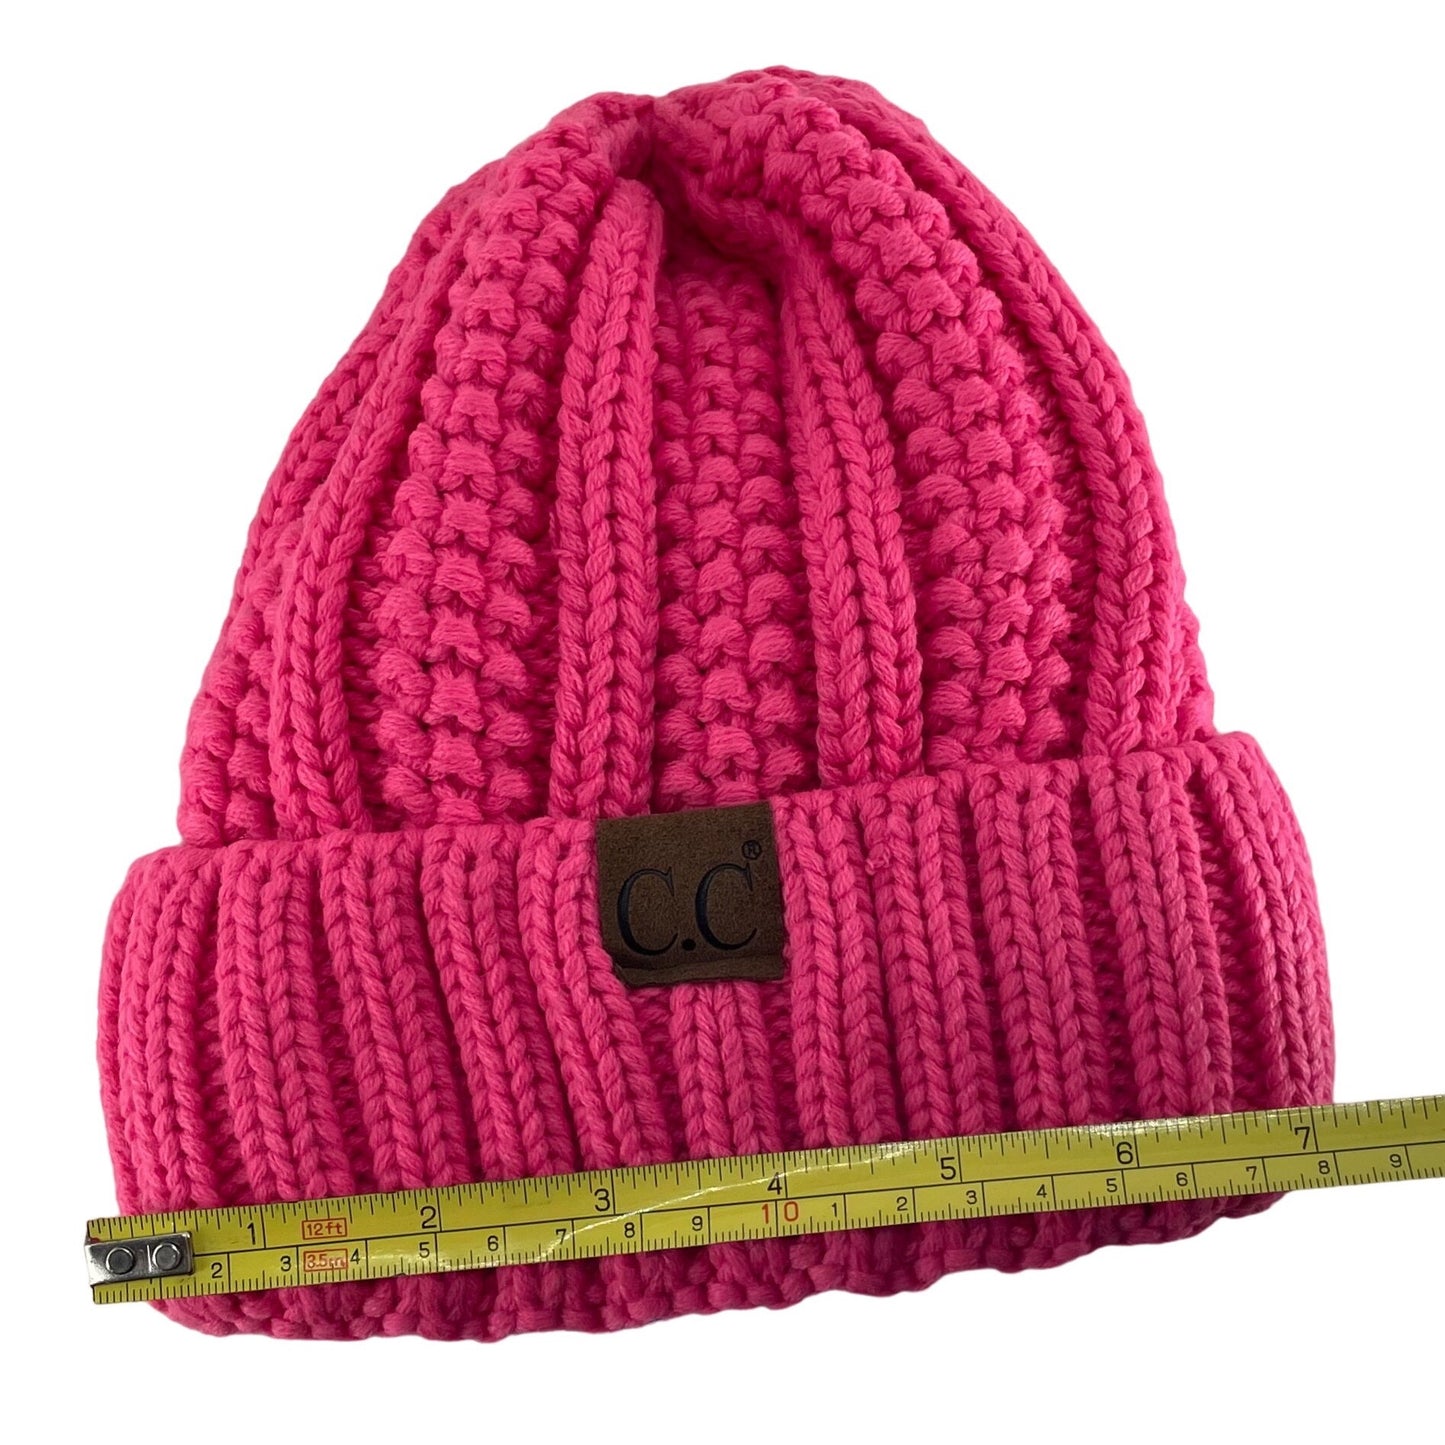 NWOT C.C. Girl's Size Small Fuchsia Pink Hat